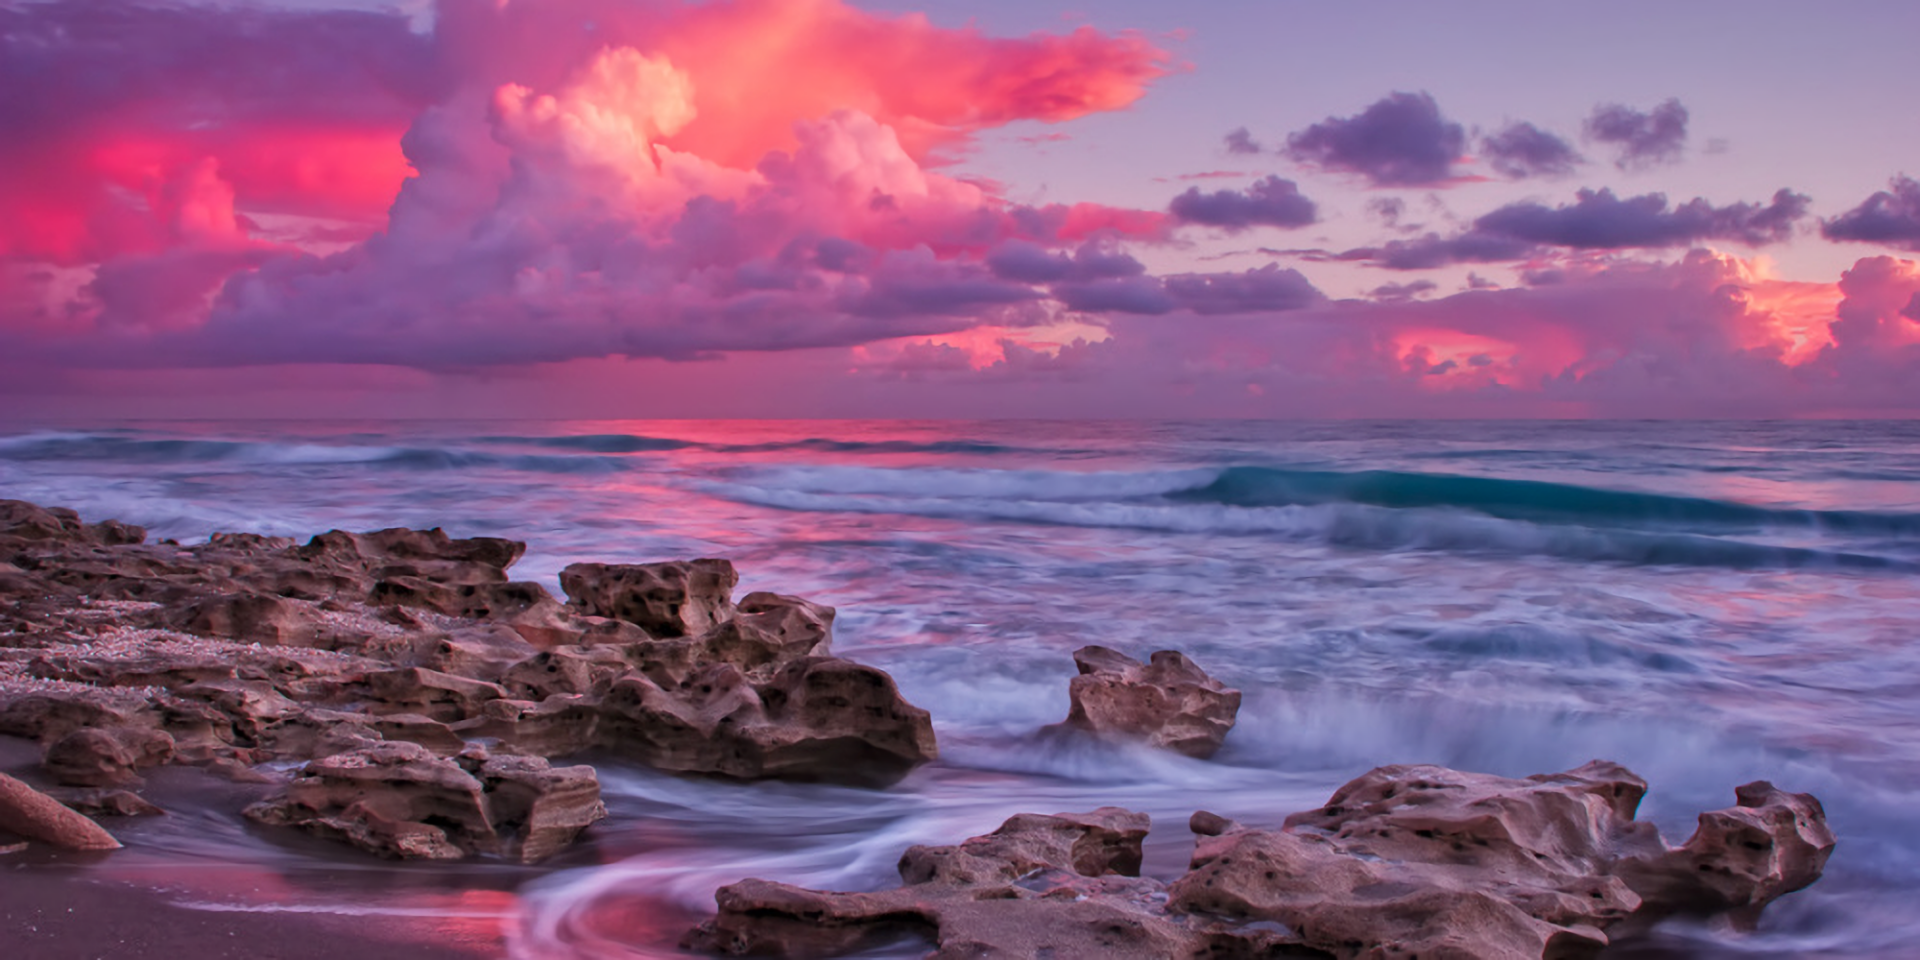 2000x1000 Pink Ocean Sunset Wallpaper Background Image. 